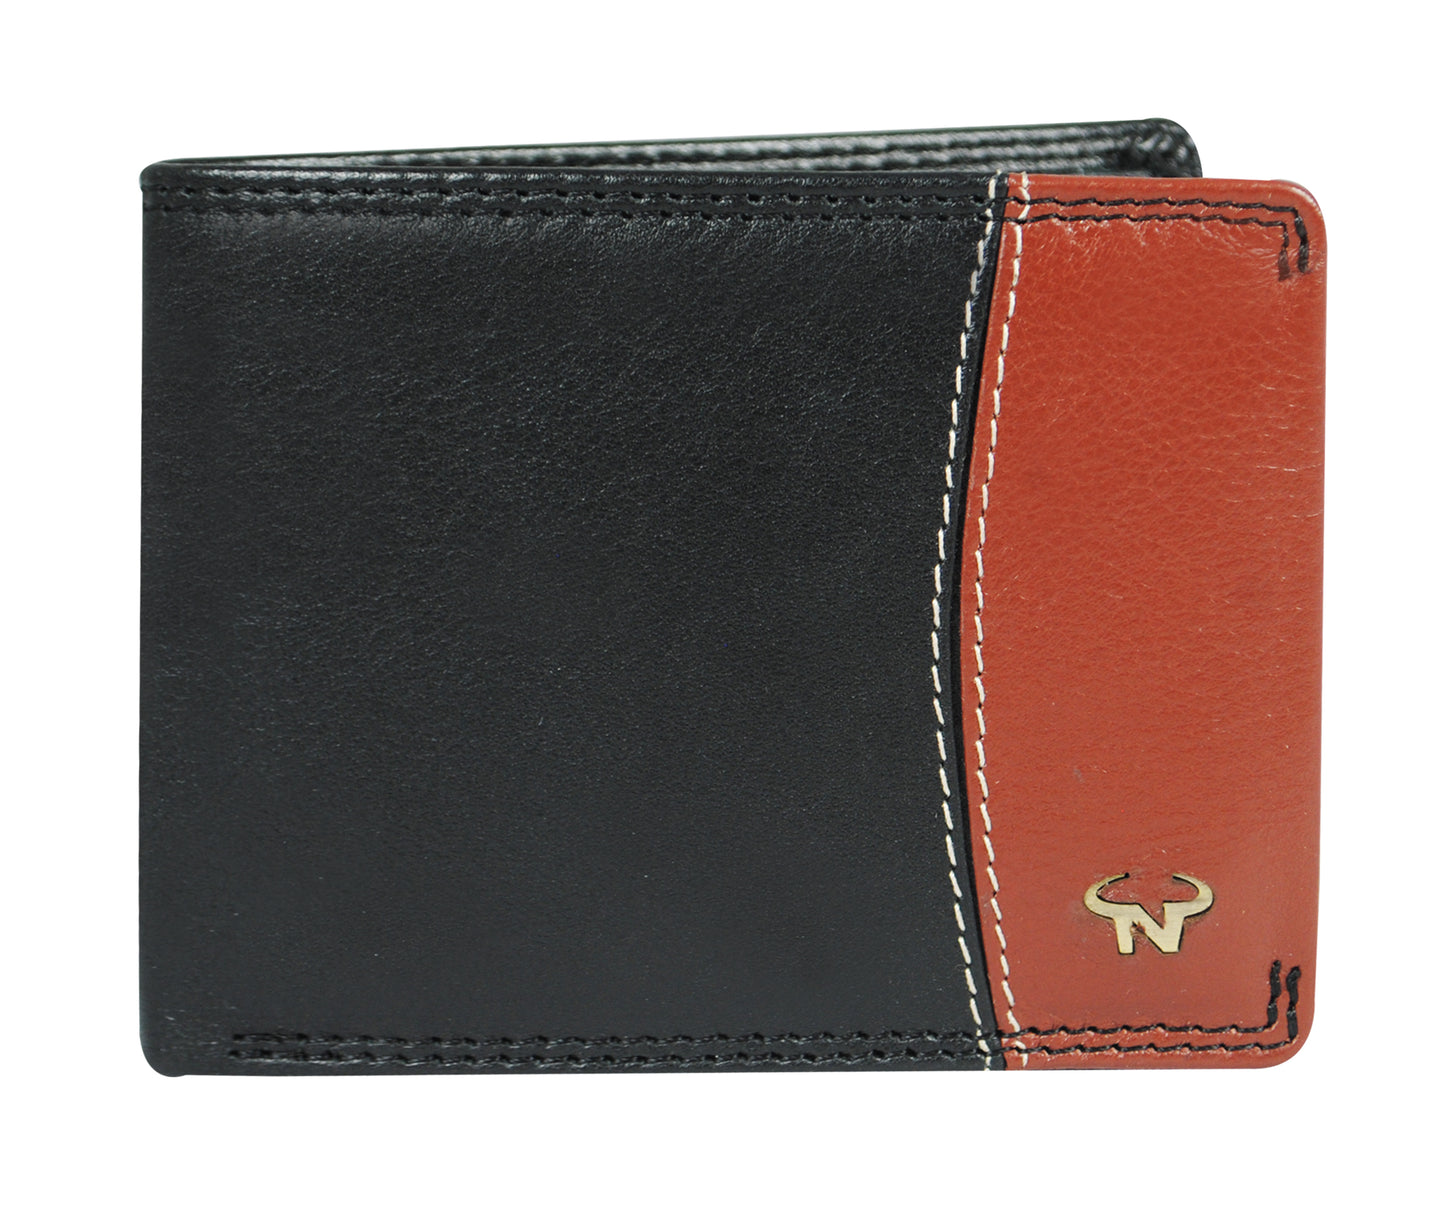 Calfnero Men's Genuine Leather Wallet (1224-Black-Brown)